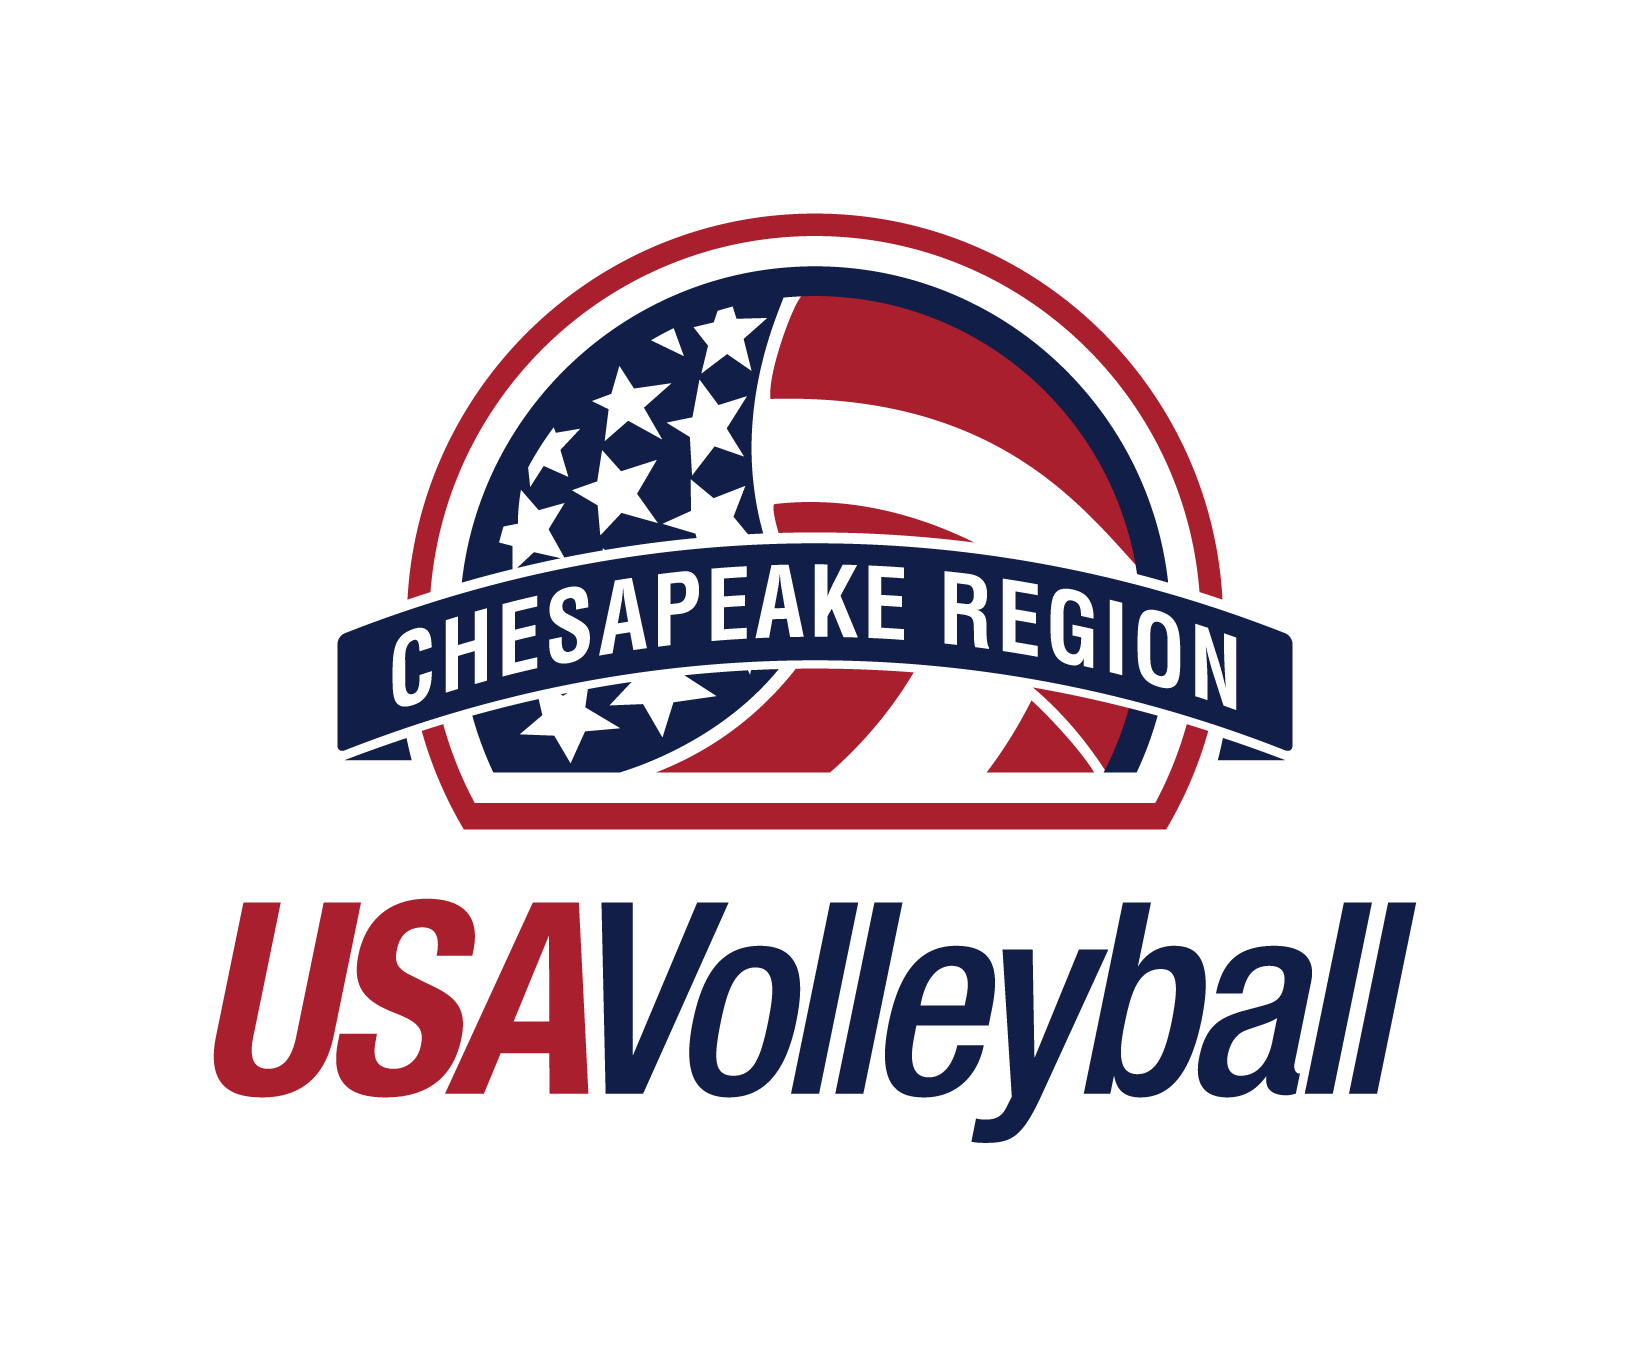 Chesapeake Region logo